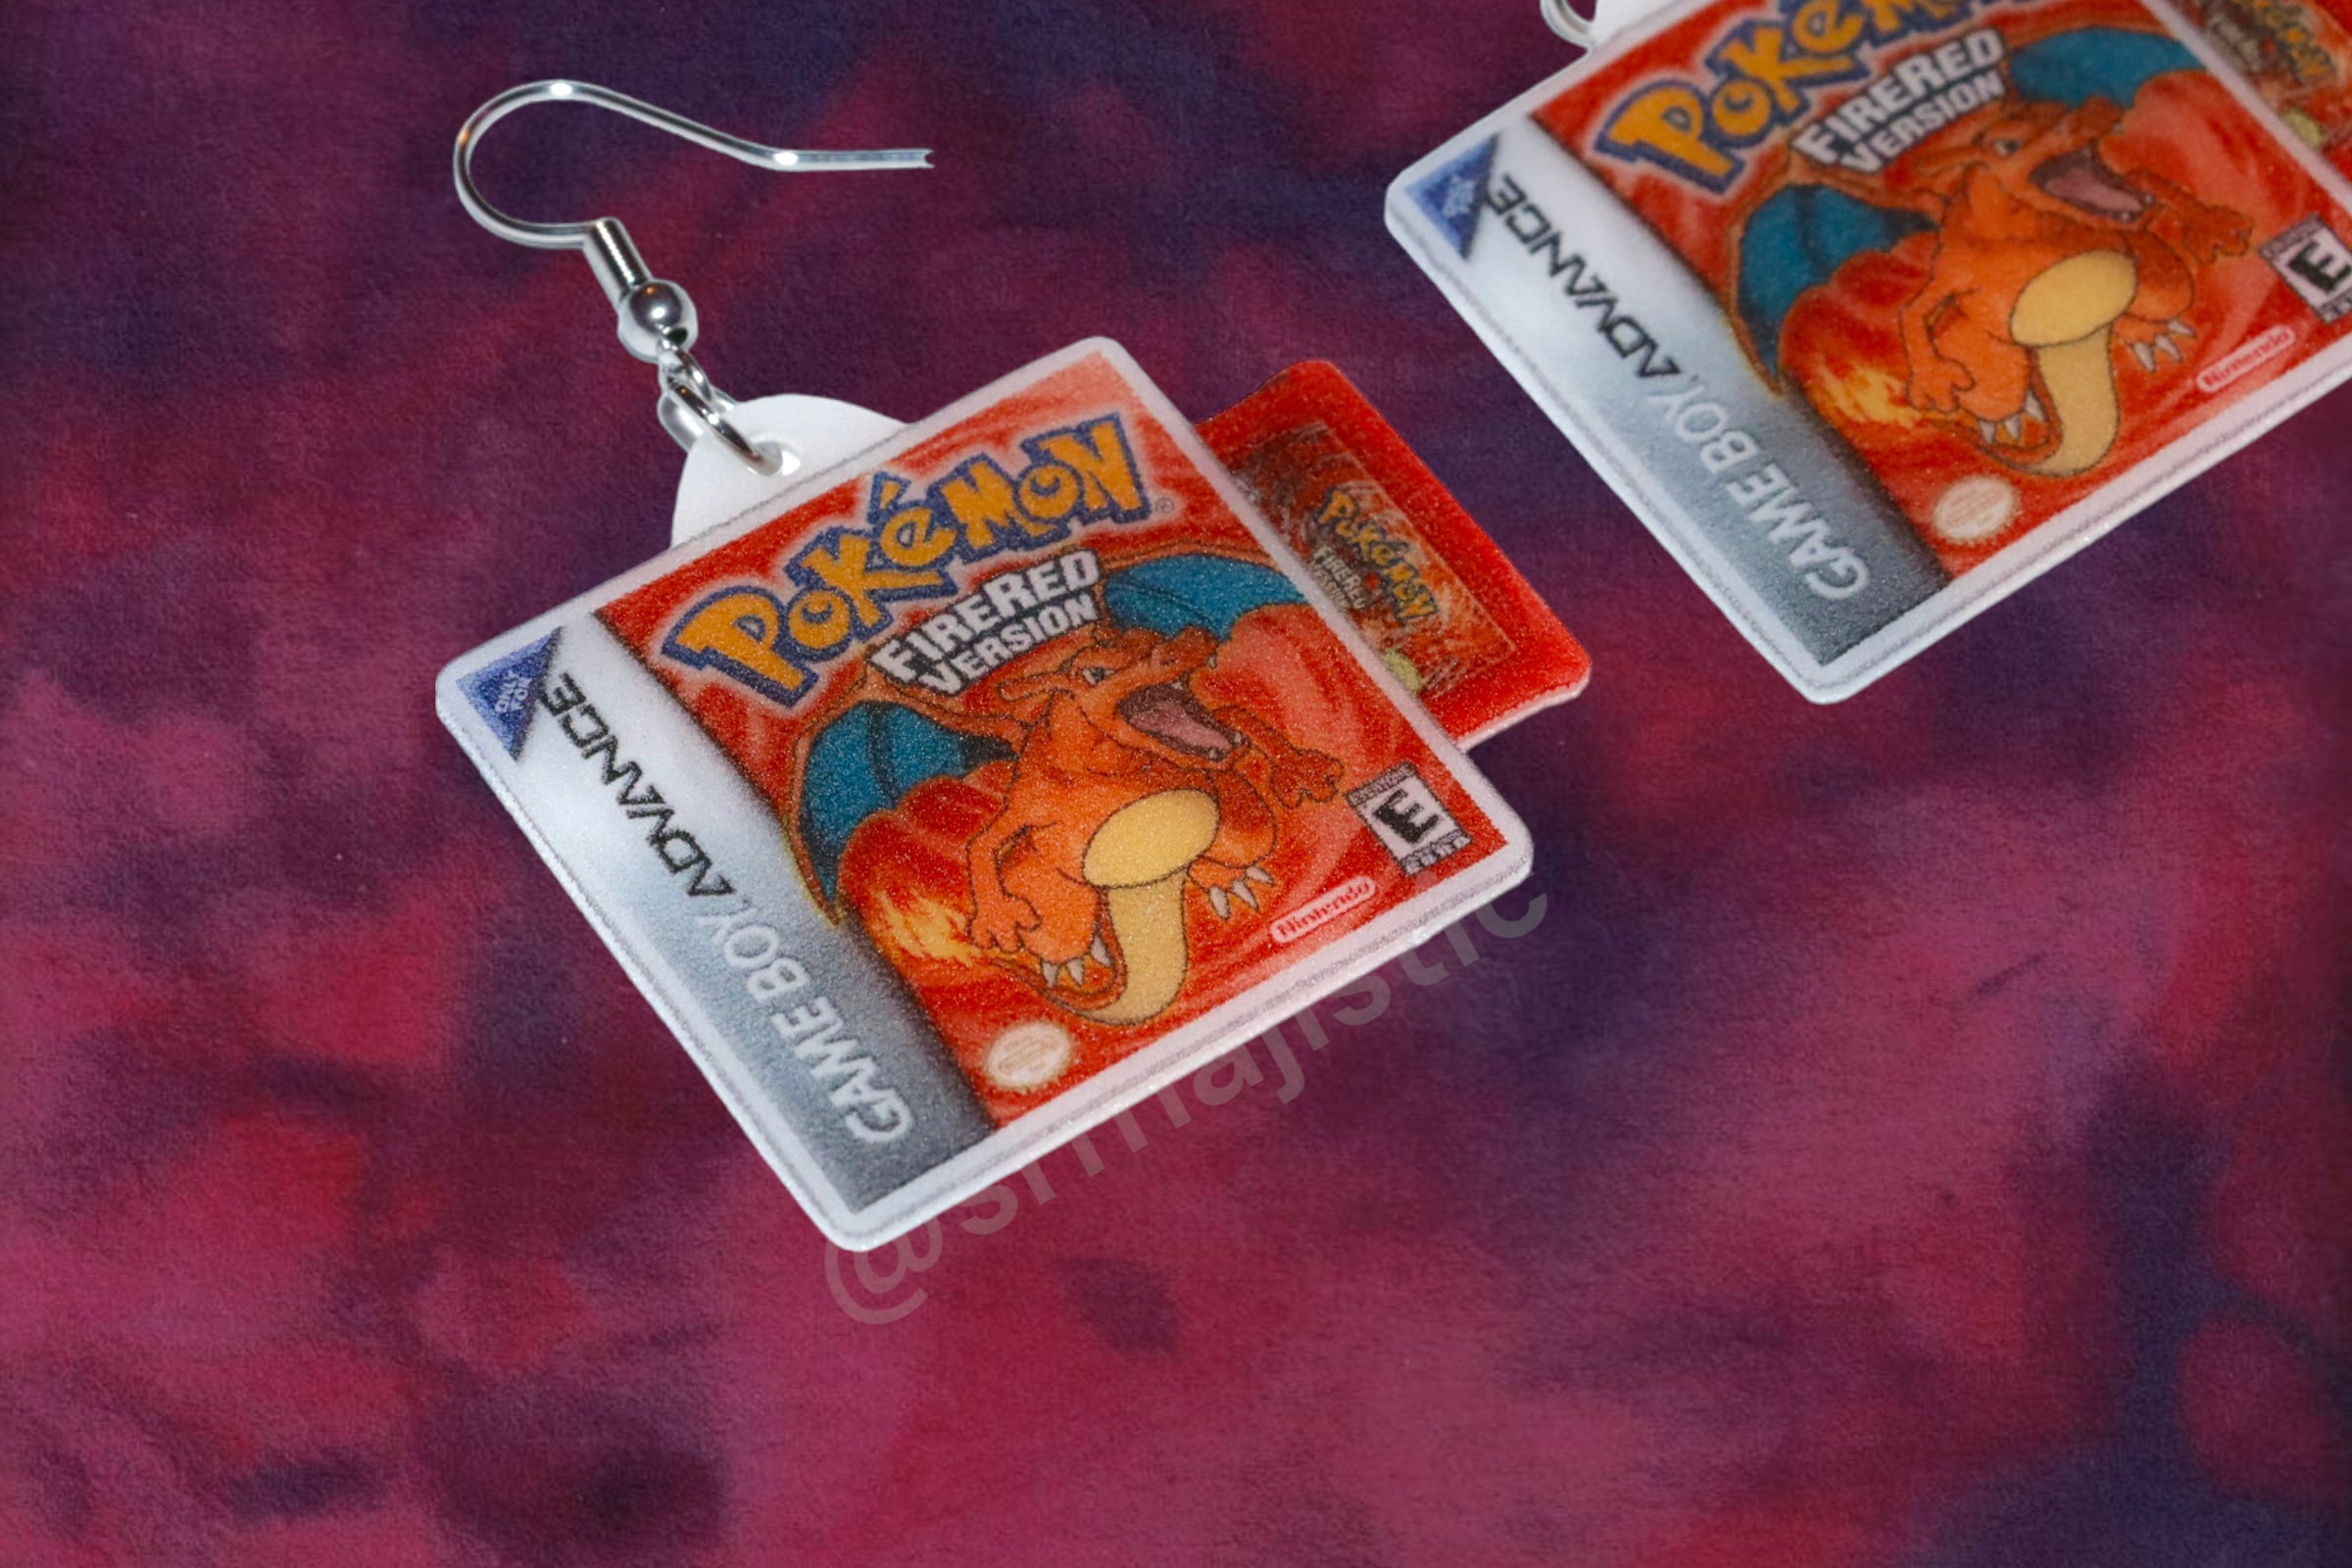 Pokémon Game Boy Advance 2D Game Detailed Handmade Earrings!